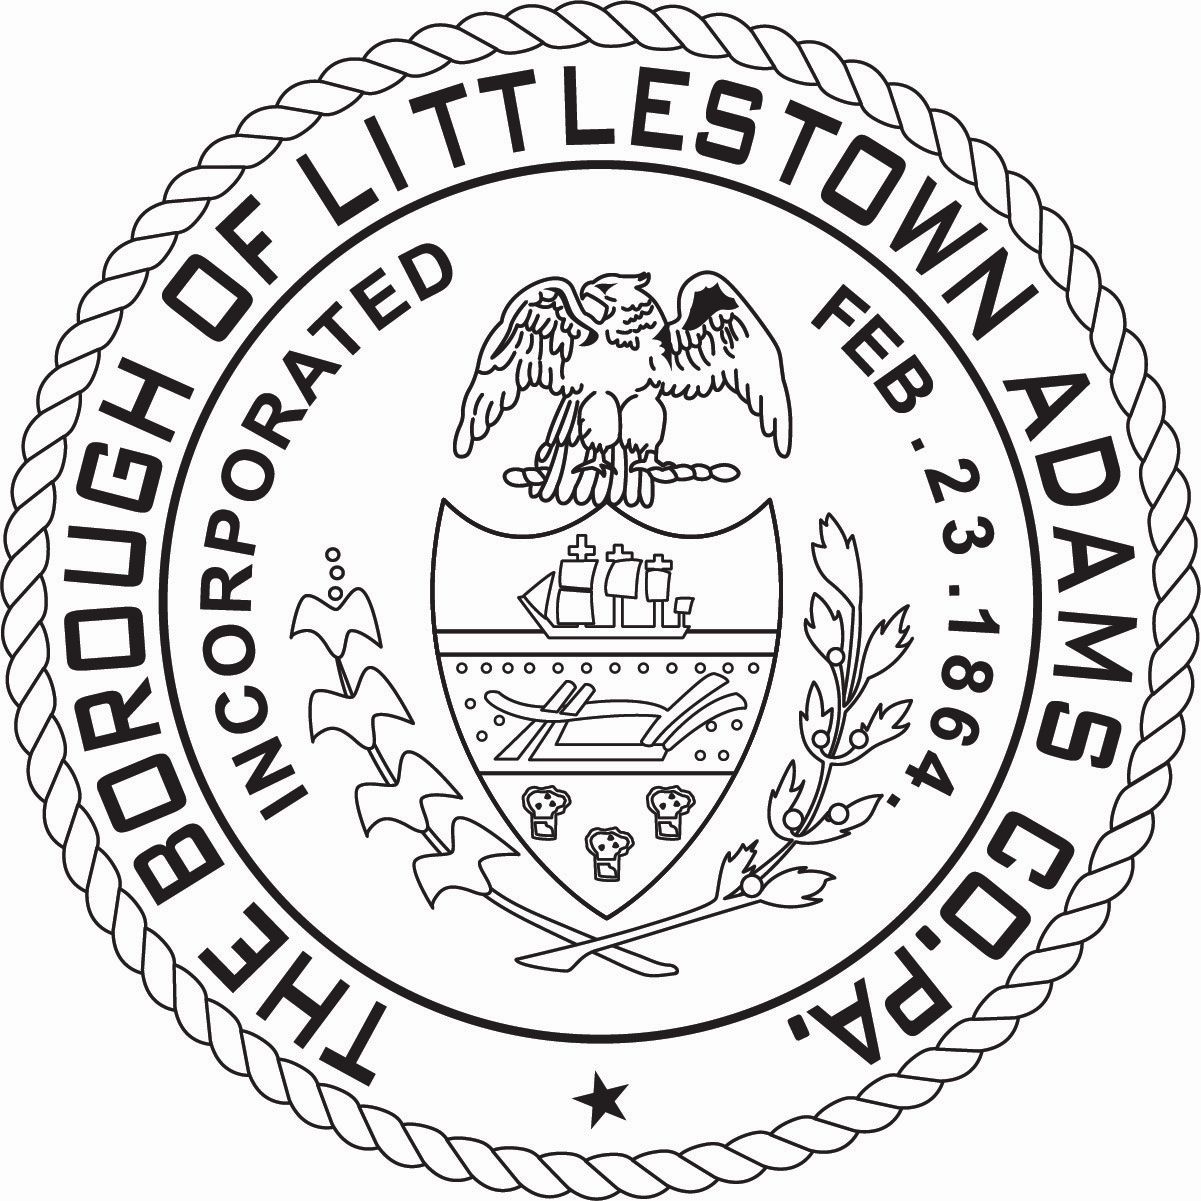 Littlestown Borough URL